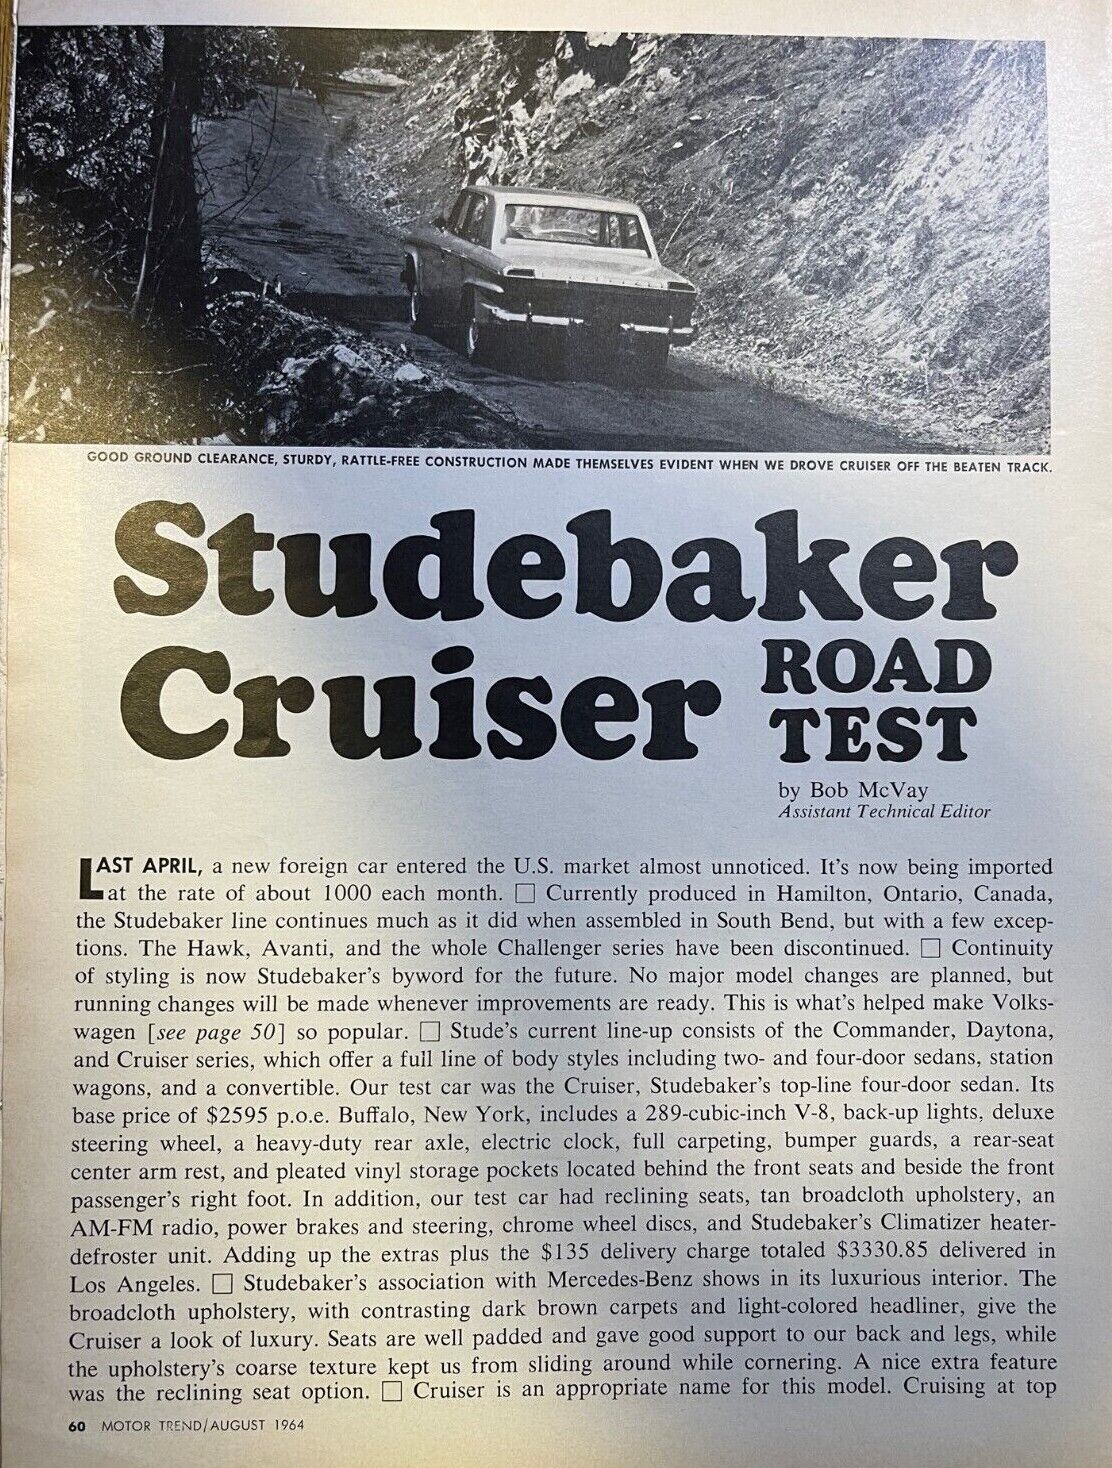  Road Test 1964 Studebaker Cruiser illustrated